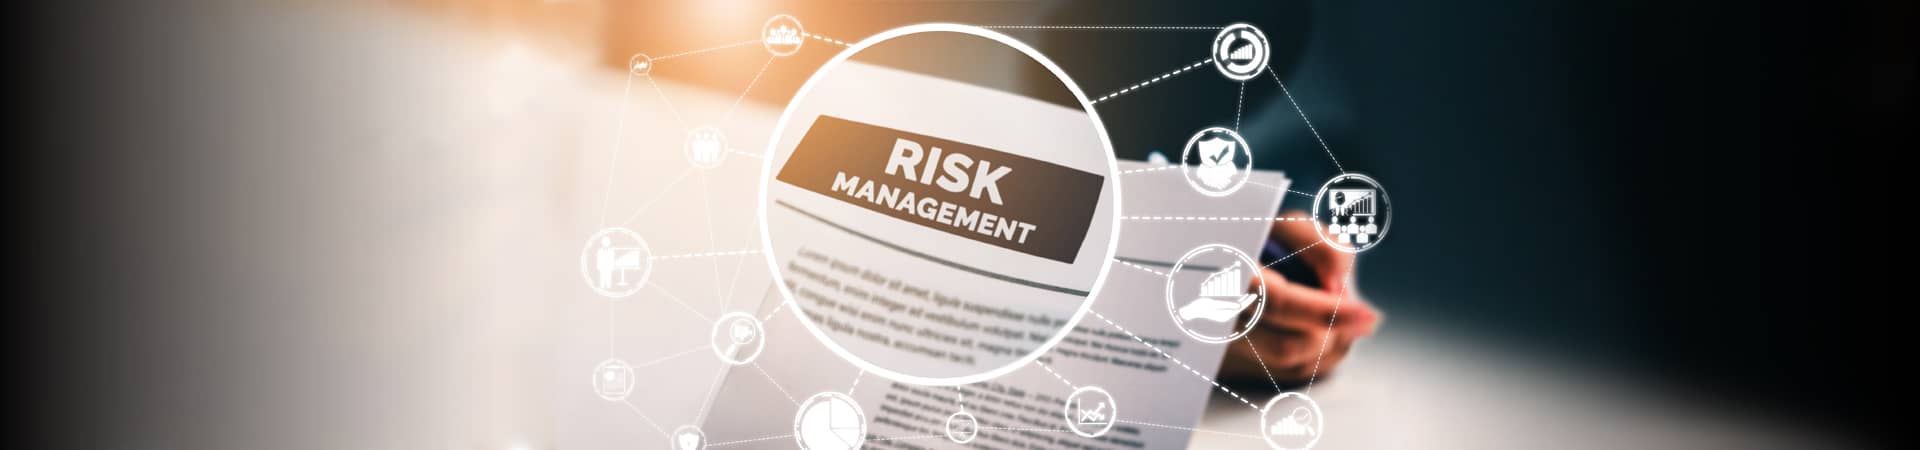 Security Risk Management